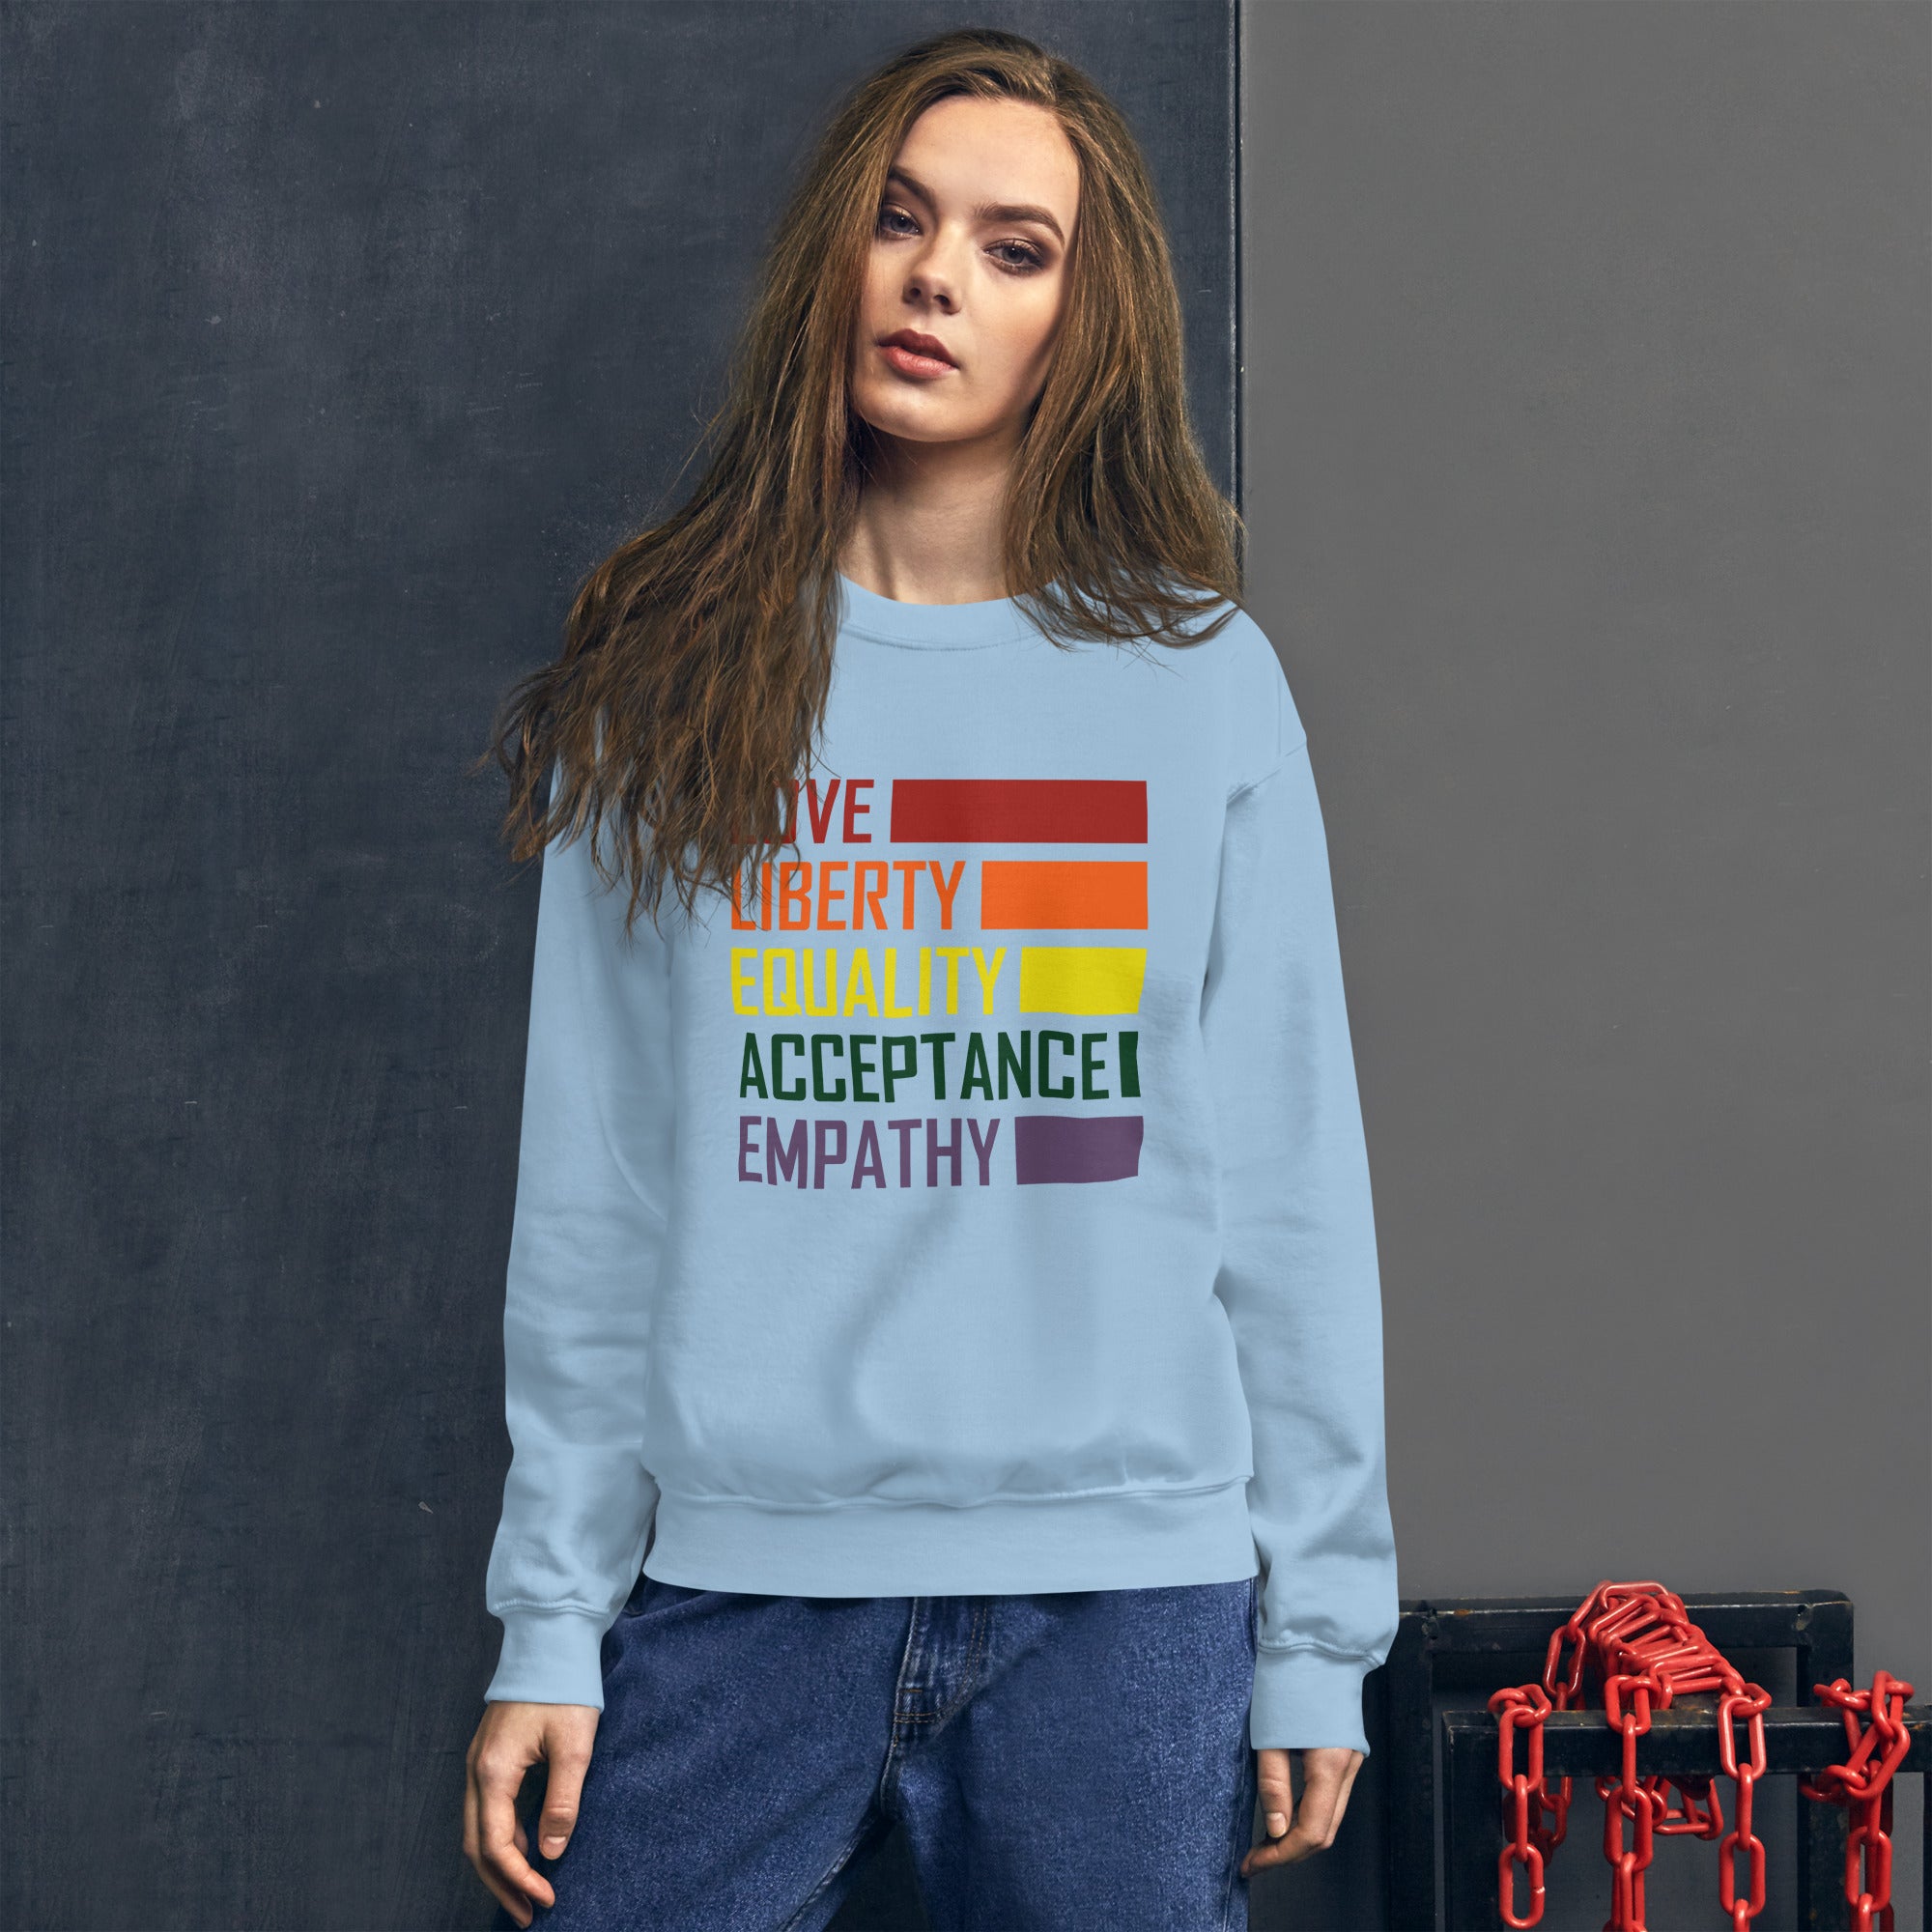 Love Liberty Equality Acceptance Empathy Women's Rights Feminist LGBT Pride Rainbow Women's Sweatshirt